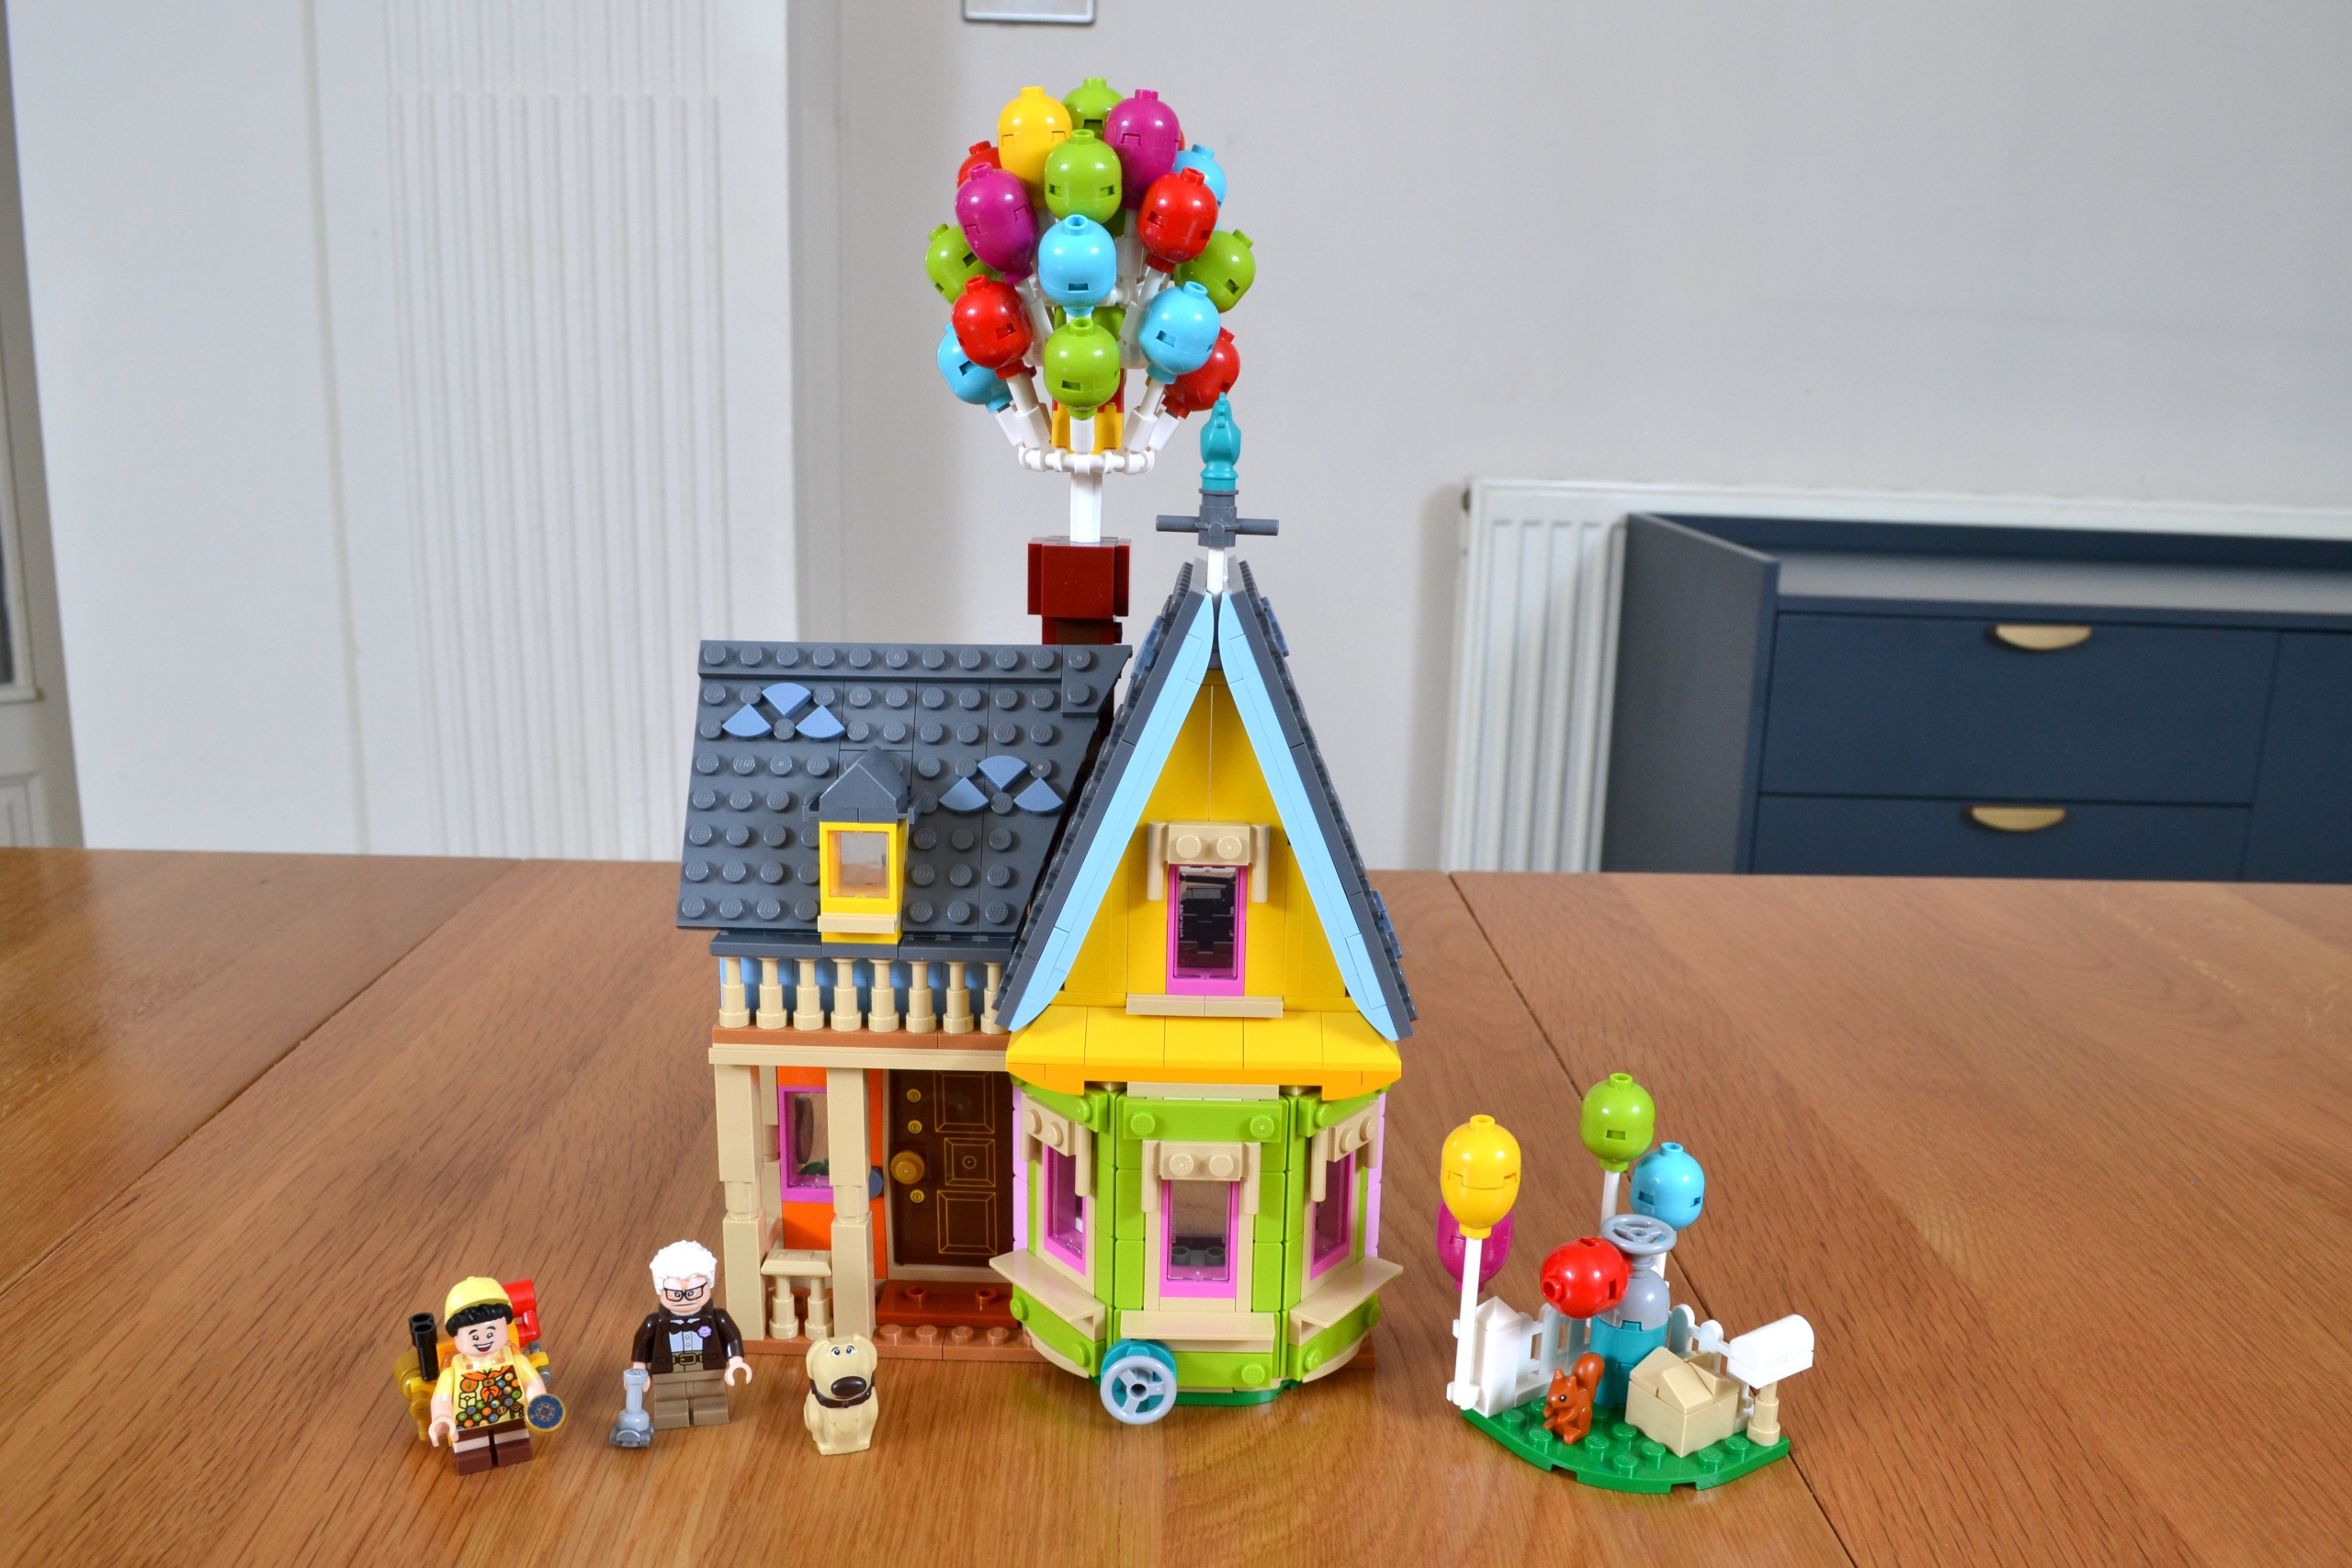 LEGO Disney 43217 'Up' House review – Pixar's best set yet?